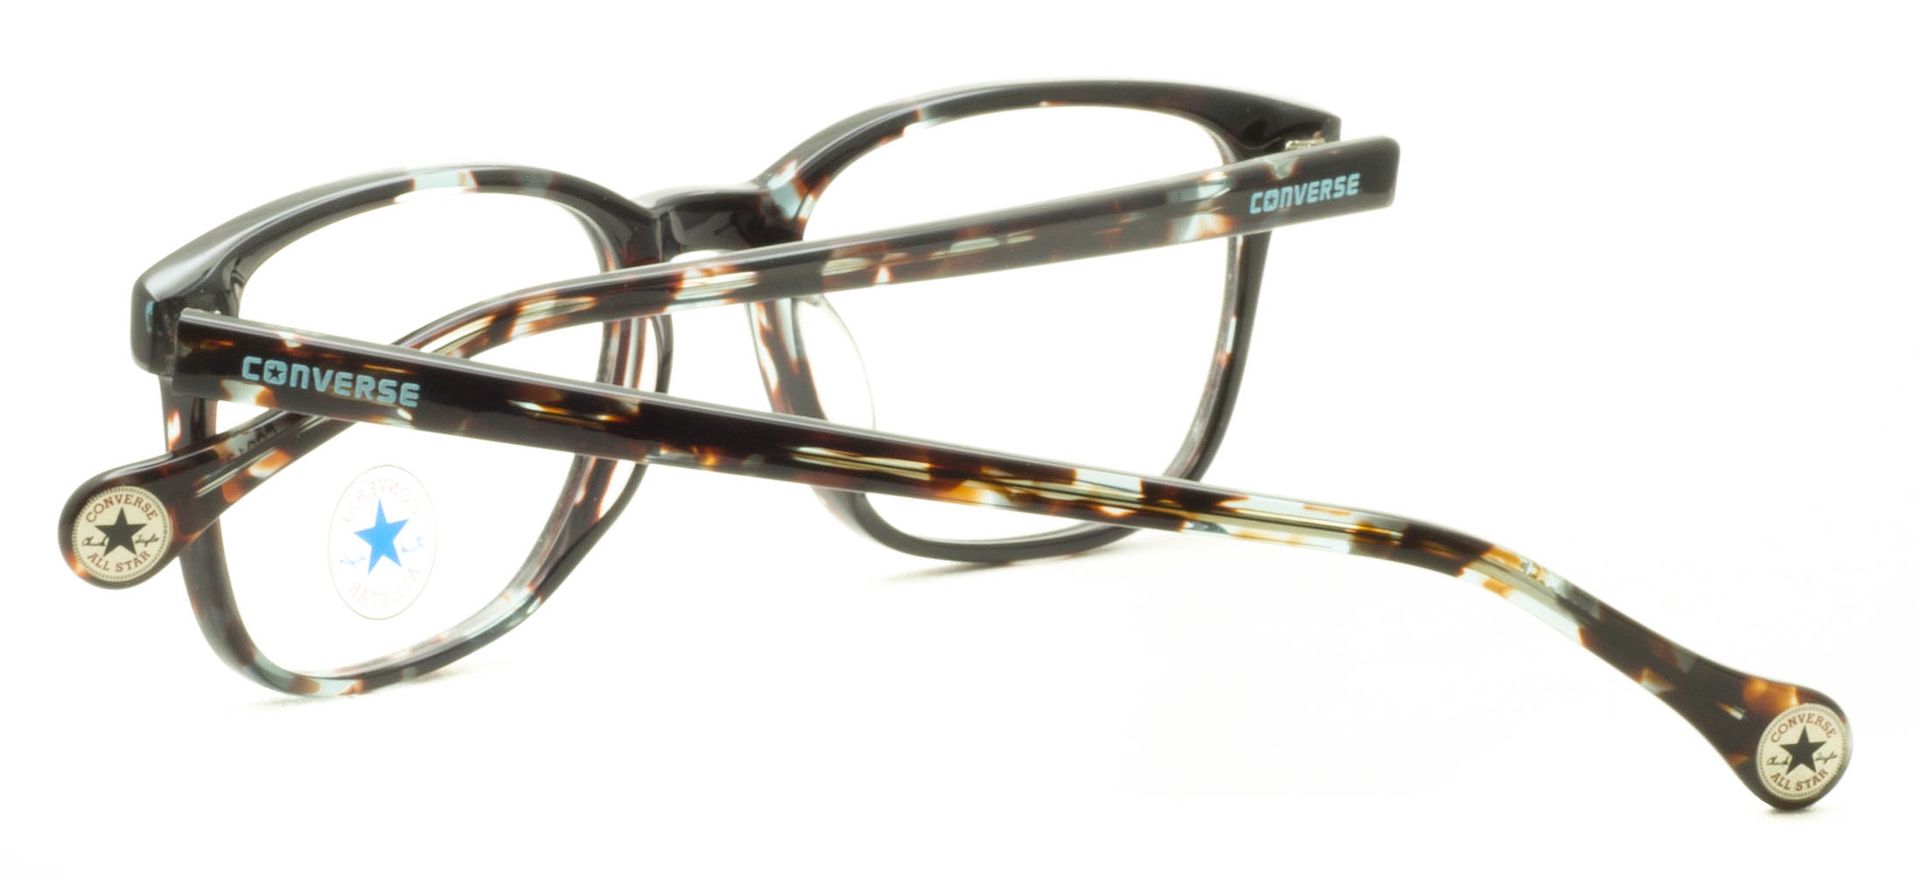 Converse All Star 47 30512375 RX Optical FRAMES Glasses Eyeglasses New - GGV Eyewear